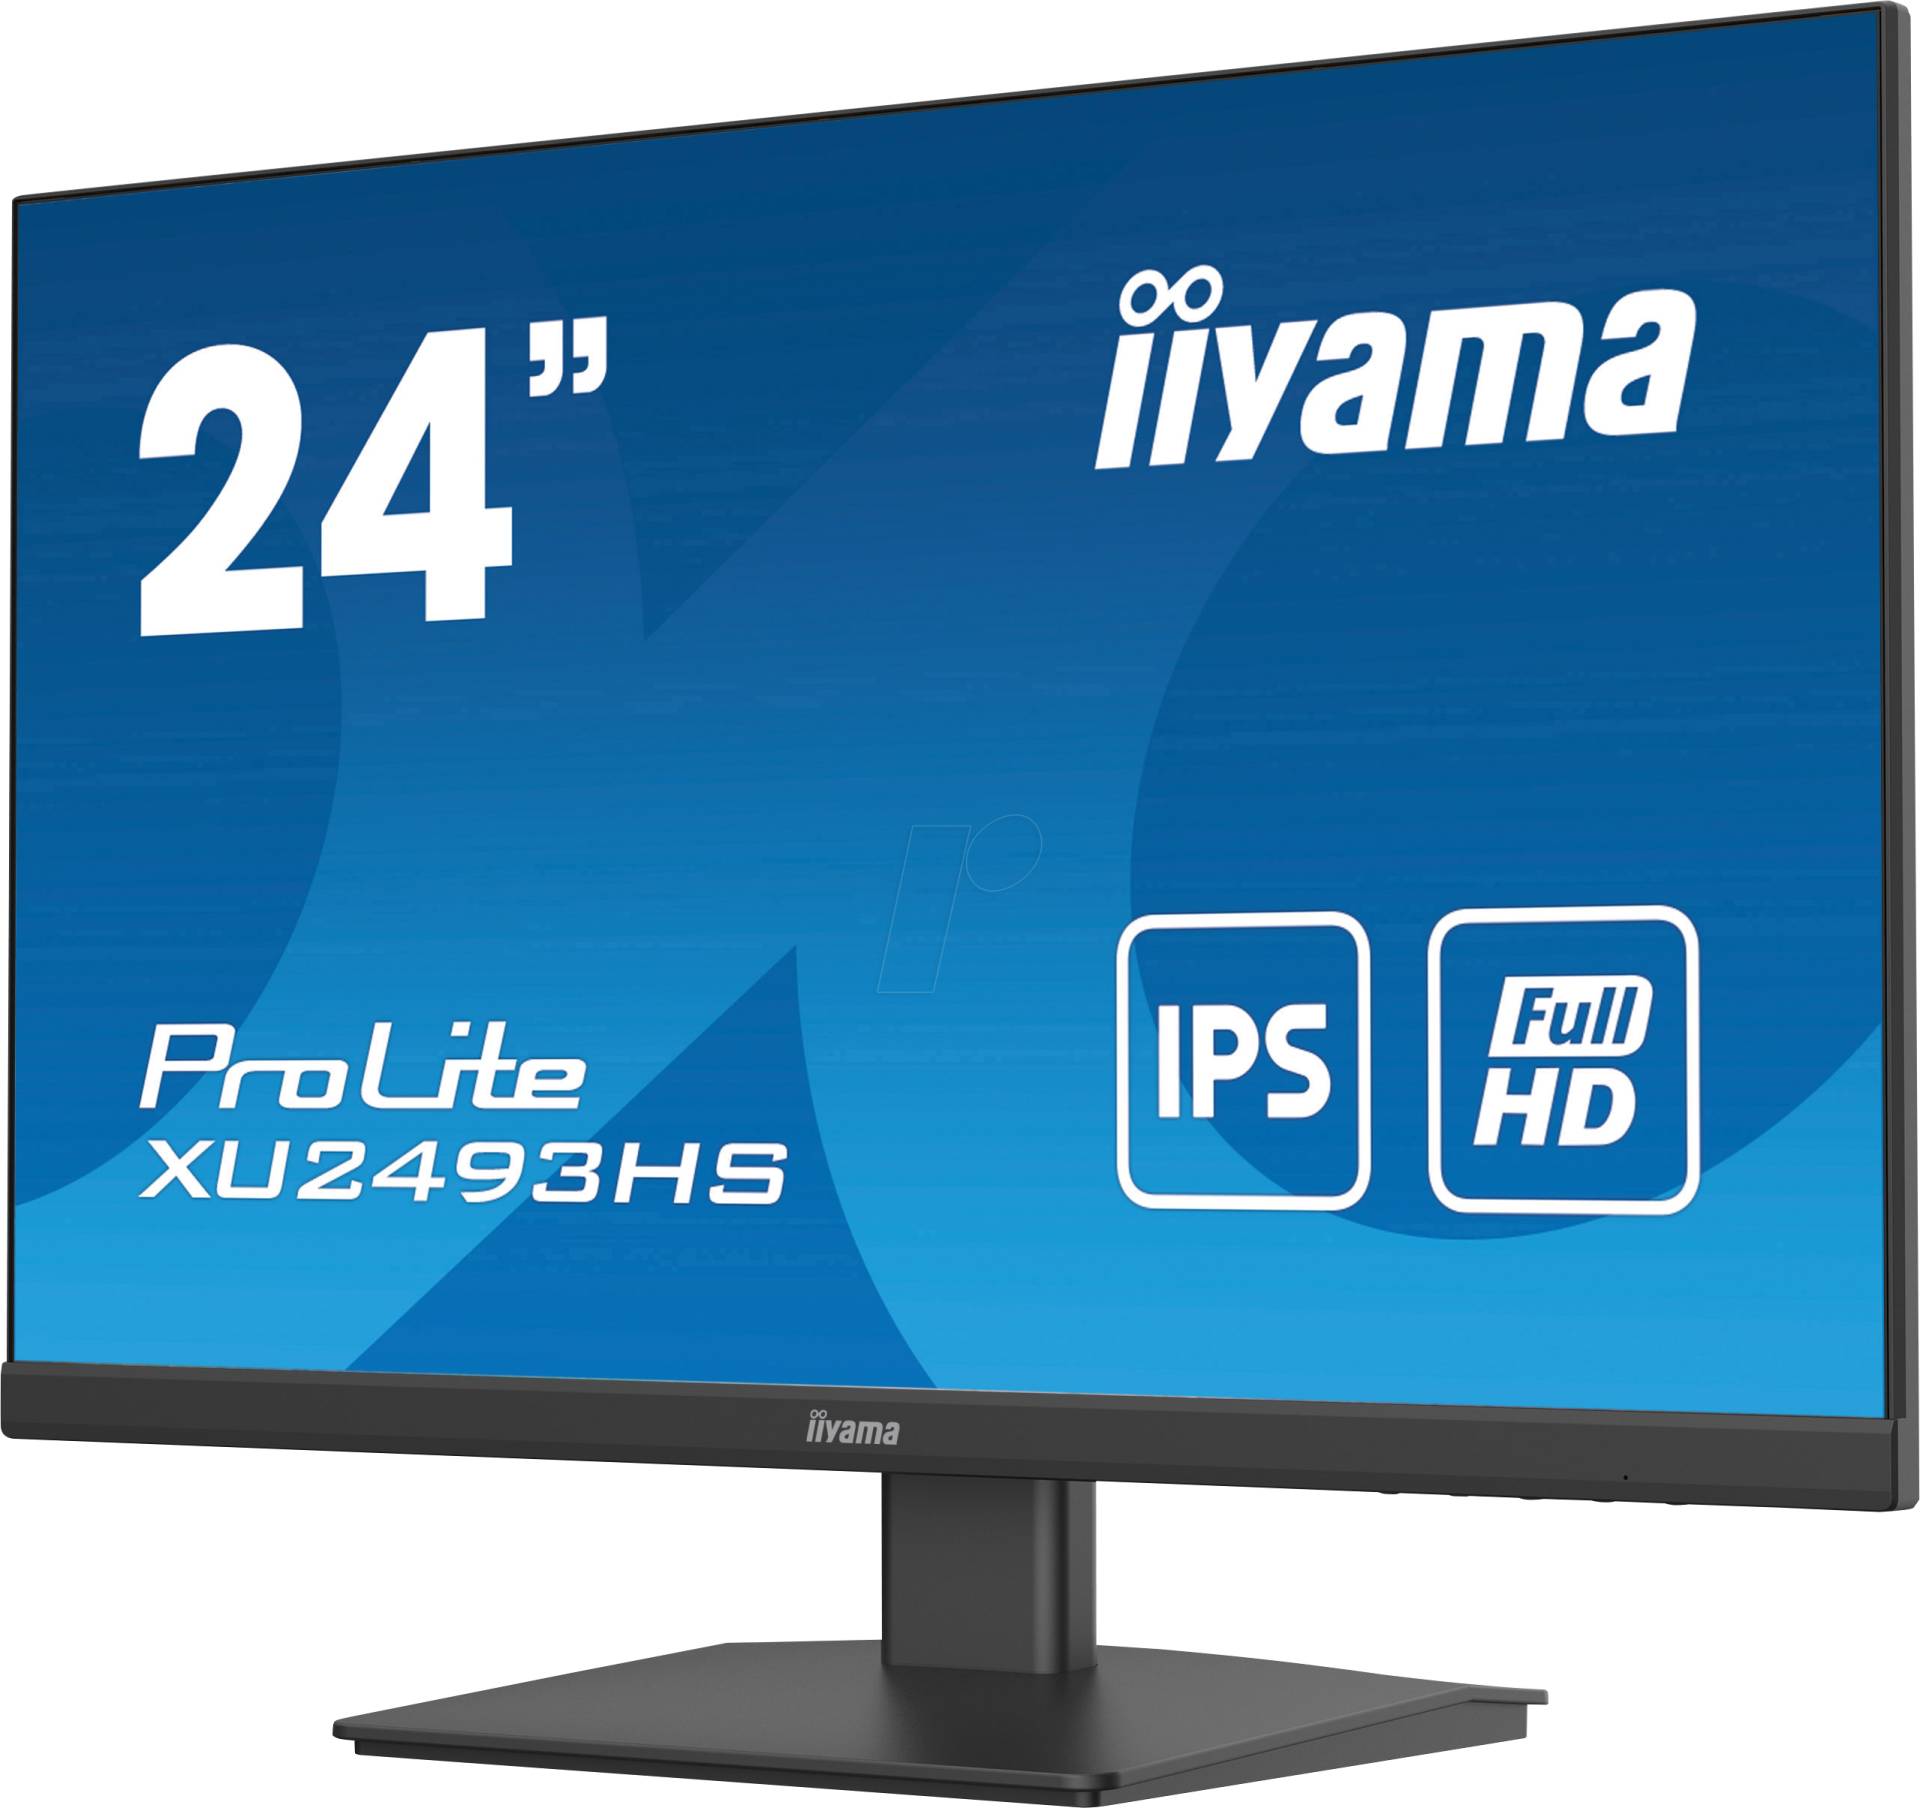 IIY XU2493HSB5 - 60,5cm Monitor, Full HD, Lautsprecher von Iiyama